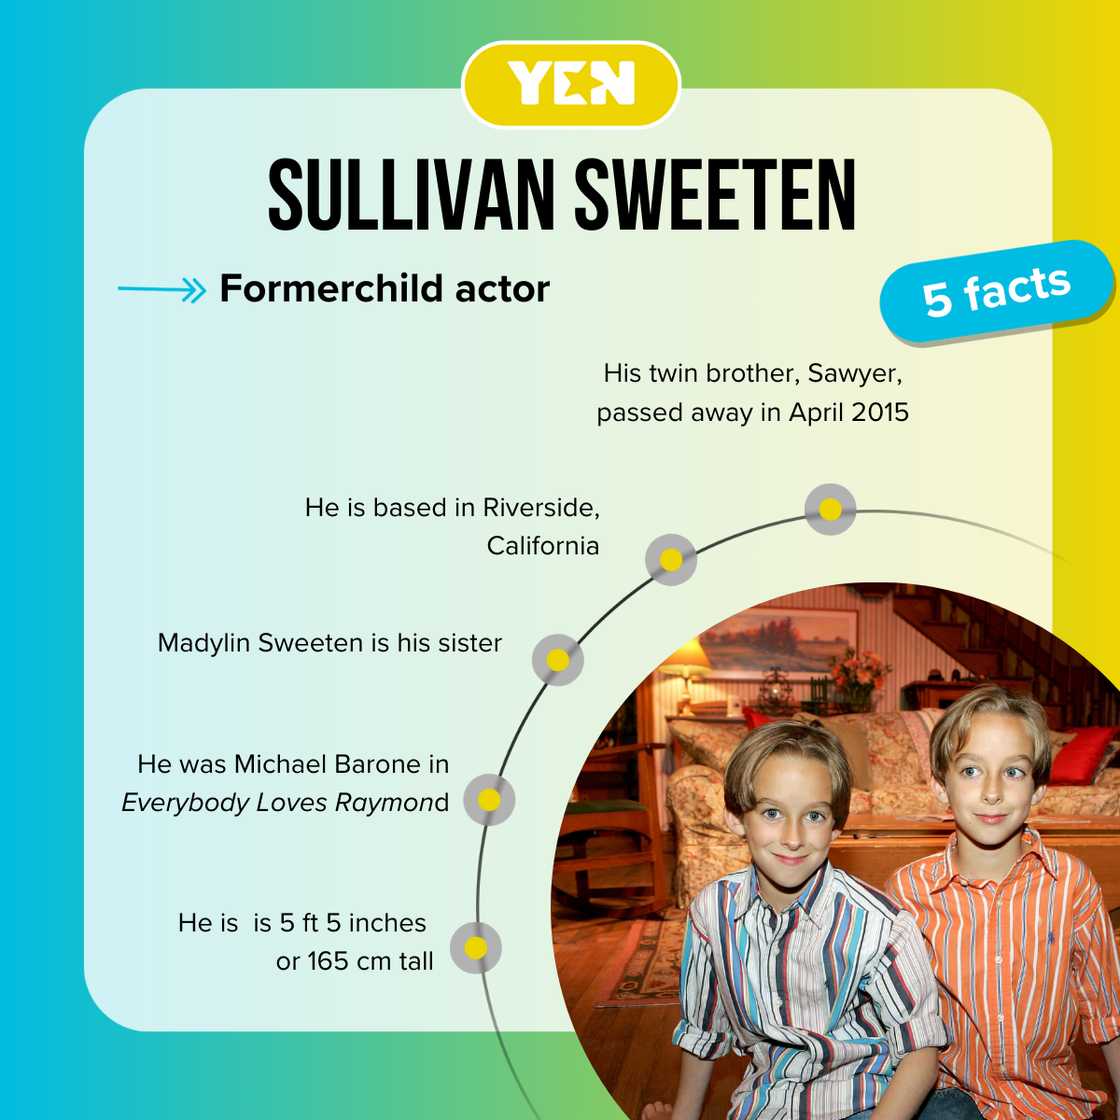 Top-5 facts about Sullivan Sweeten